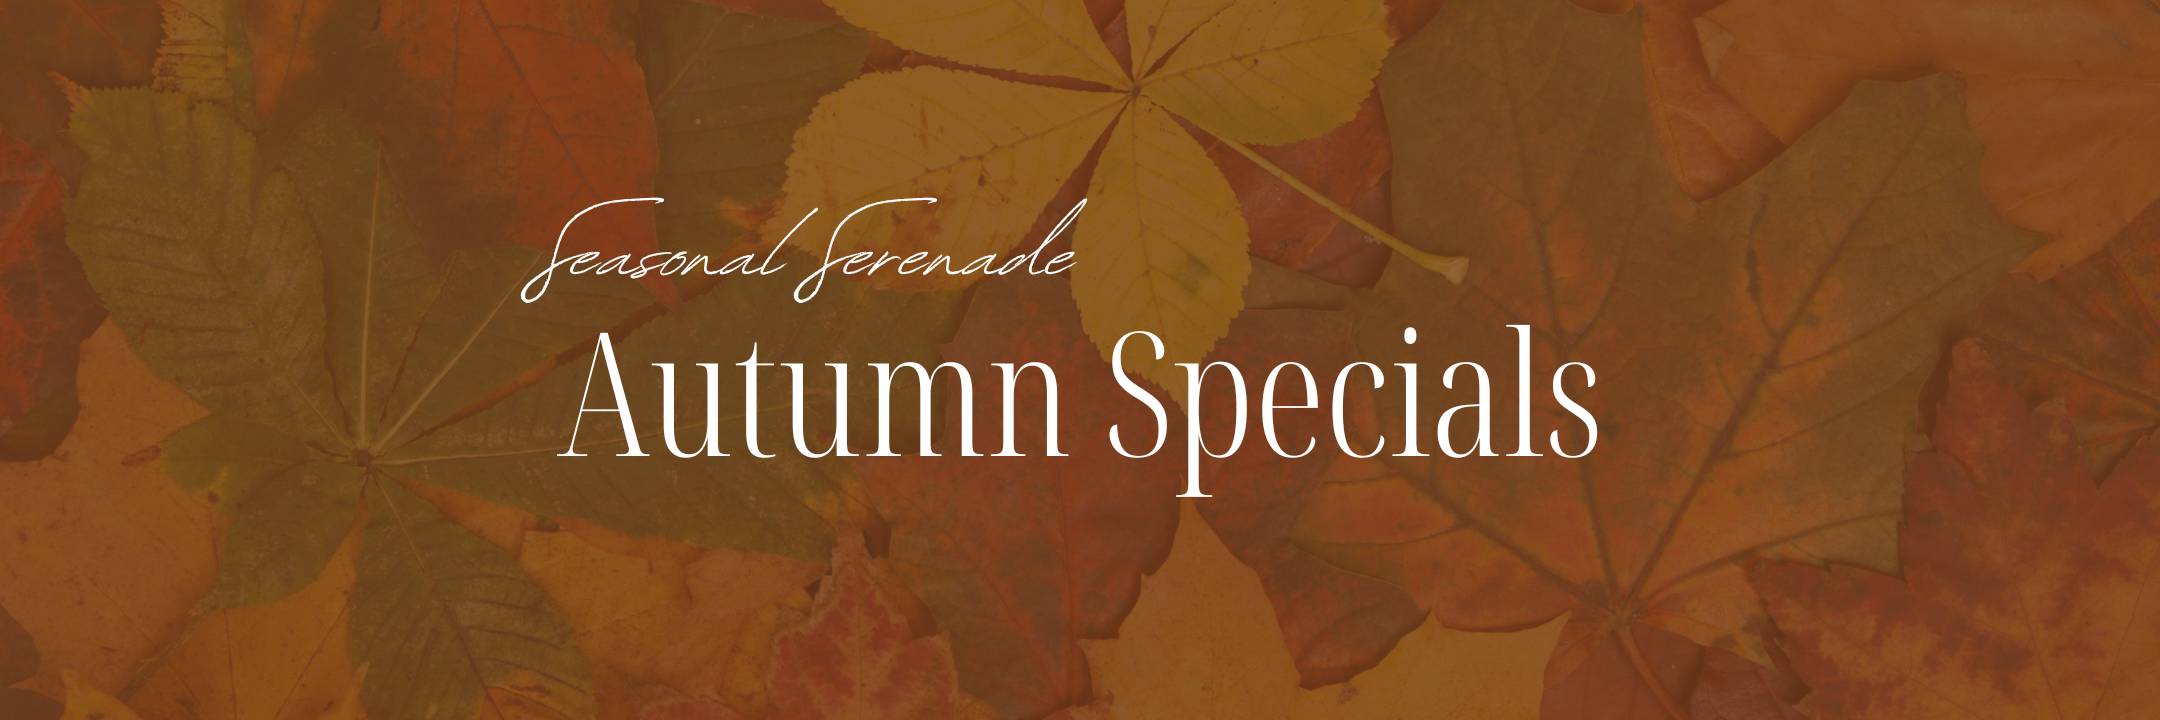 Seasonal Serenade Autumn Sepcials